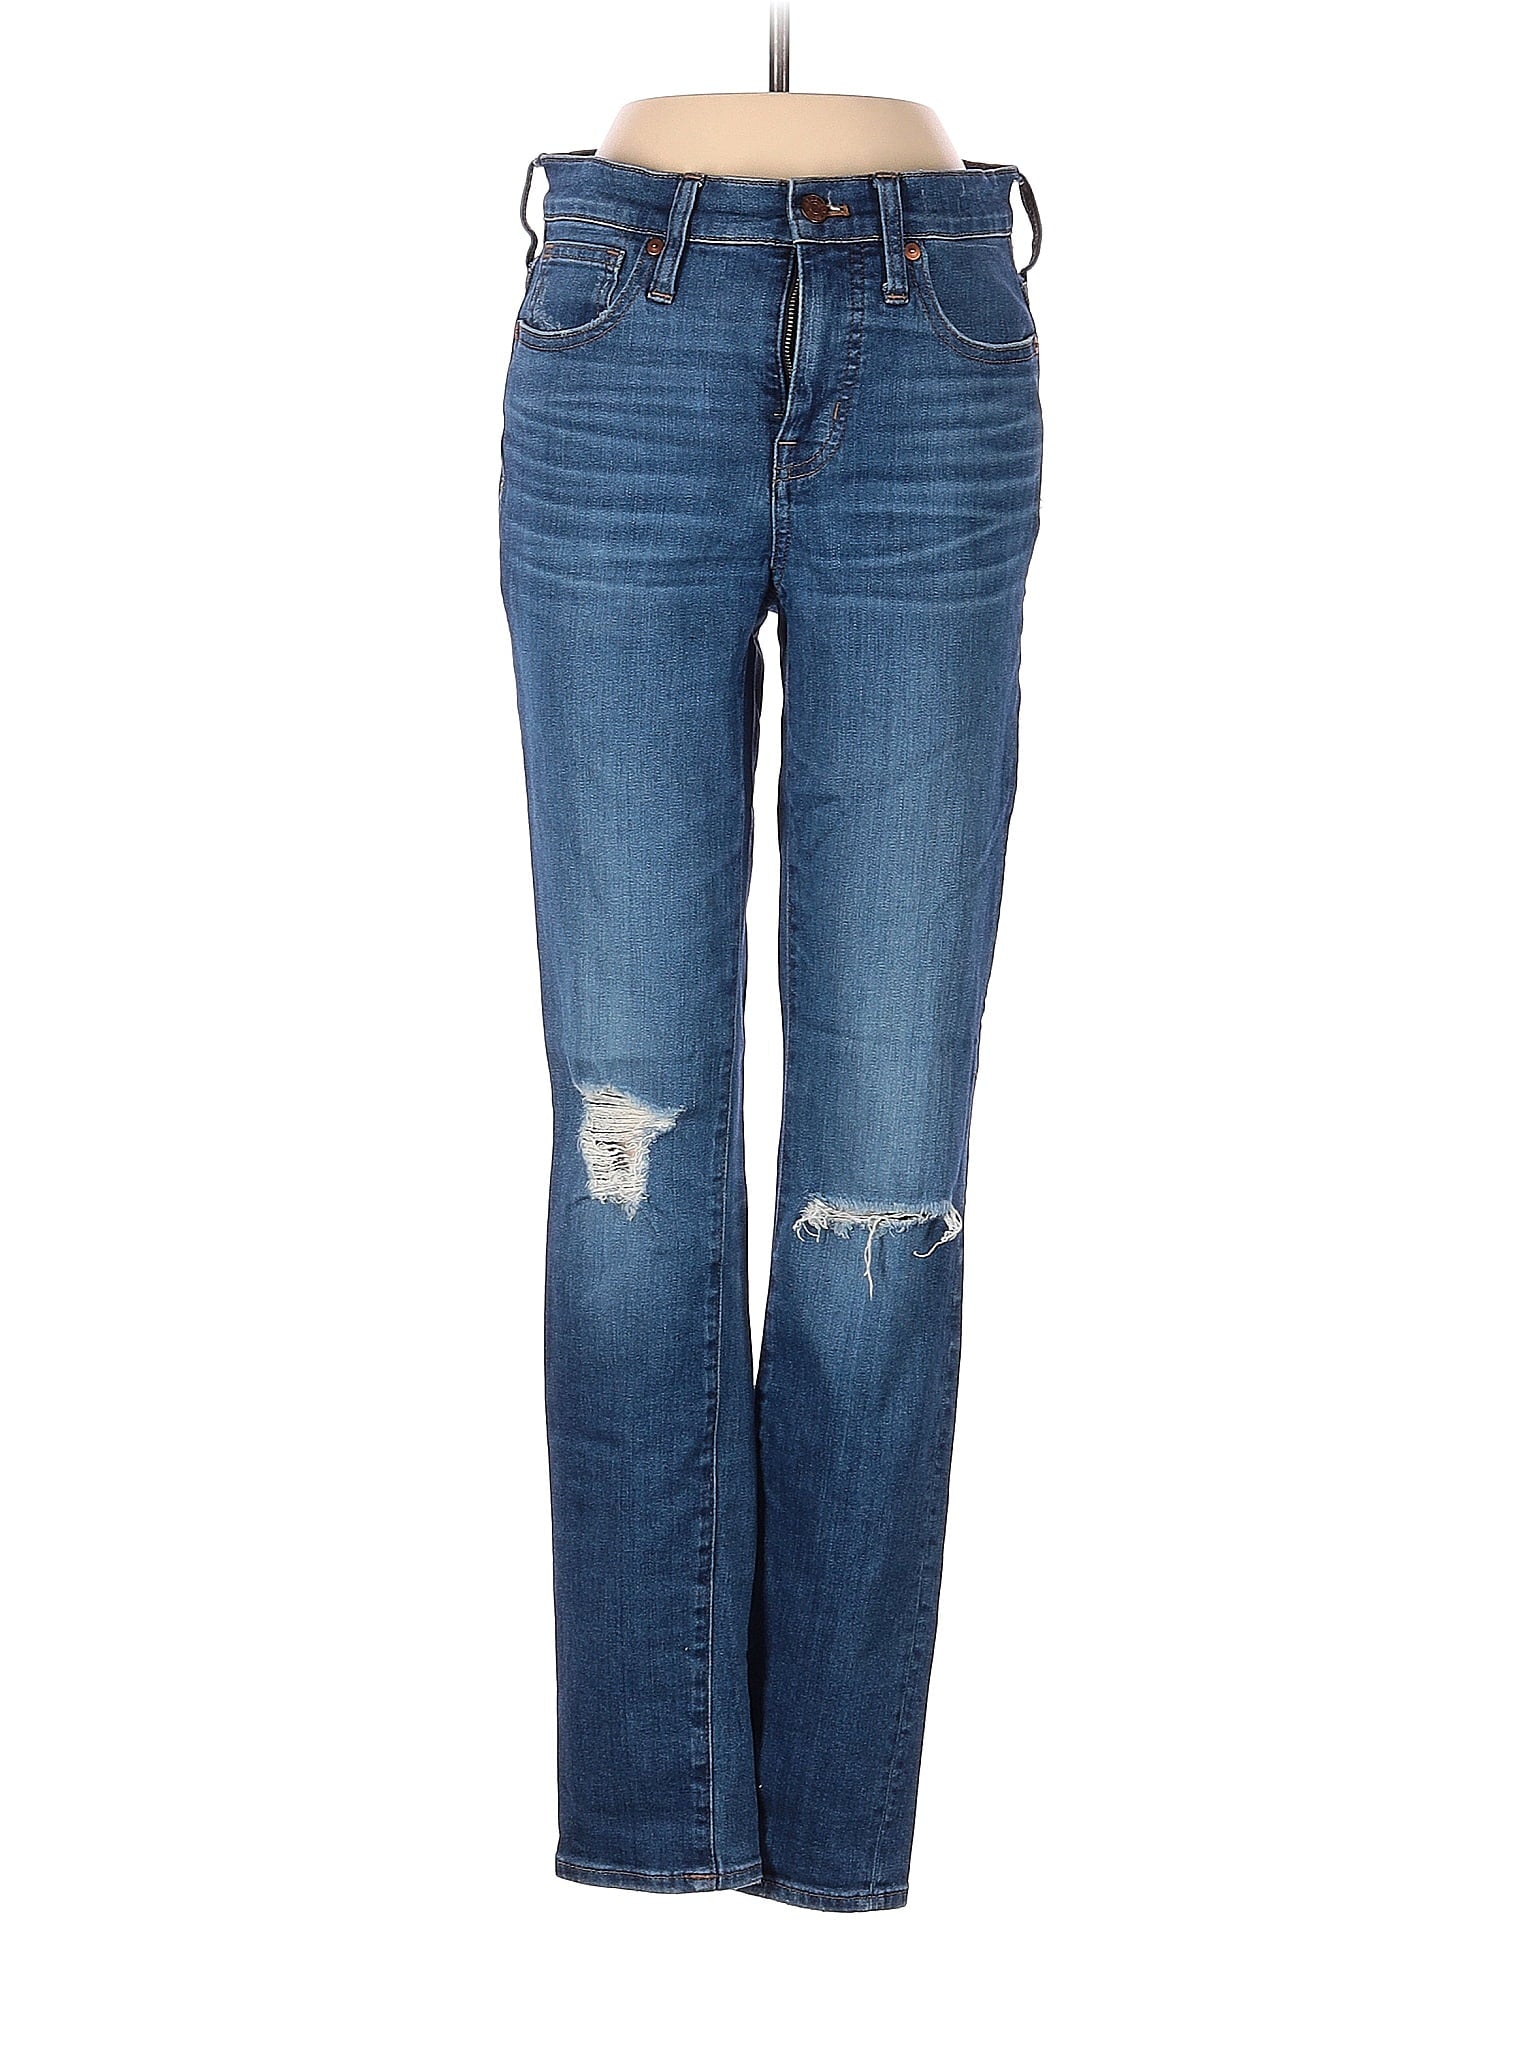 High-Rise Boyjeans Jeans in Dark Wash waist size - 25 T